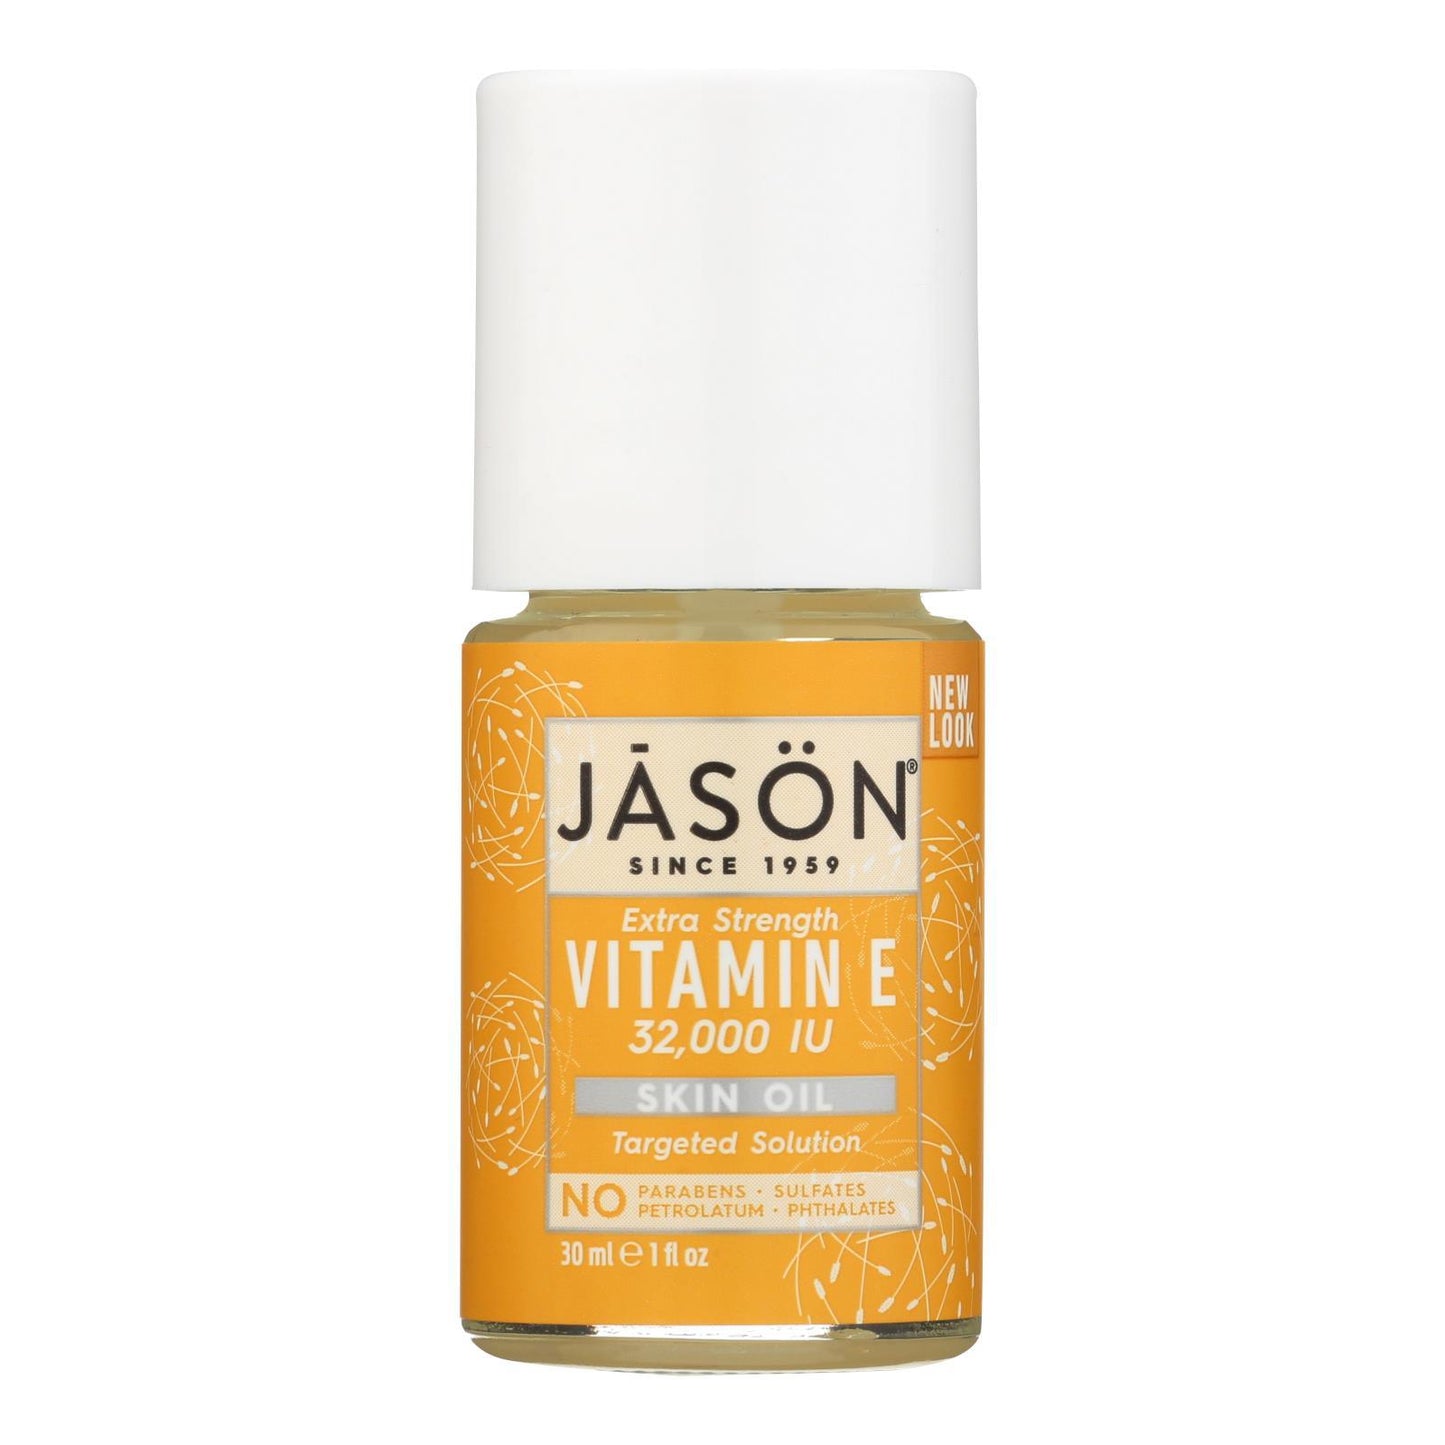 Jason Vitamin E Pure Beauty Oil - 32000 Iu - 1 Fl Oz